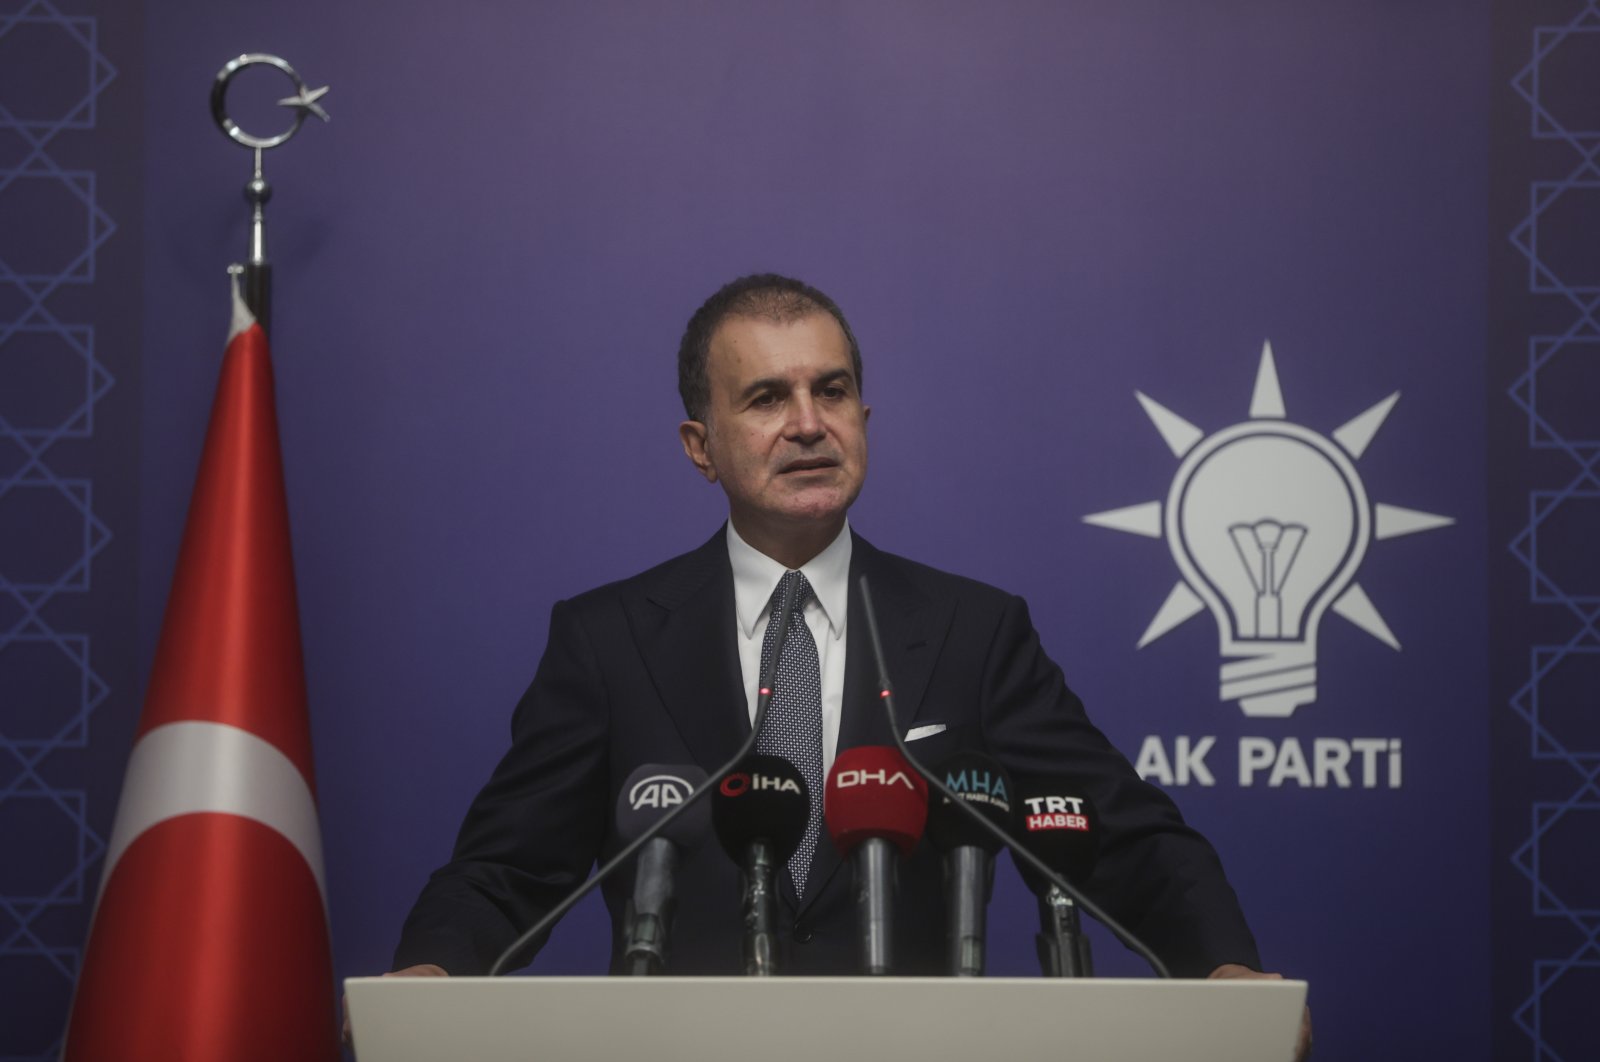 AK Party spokesperson Ömer Çelik speaks after a meeting at the party headquarters in Ankara, Türkiye, Sept. 12, 2022. (AA Photo)